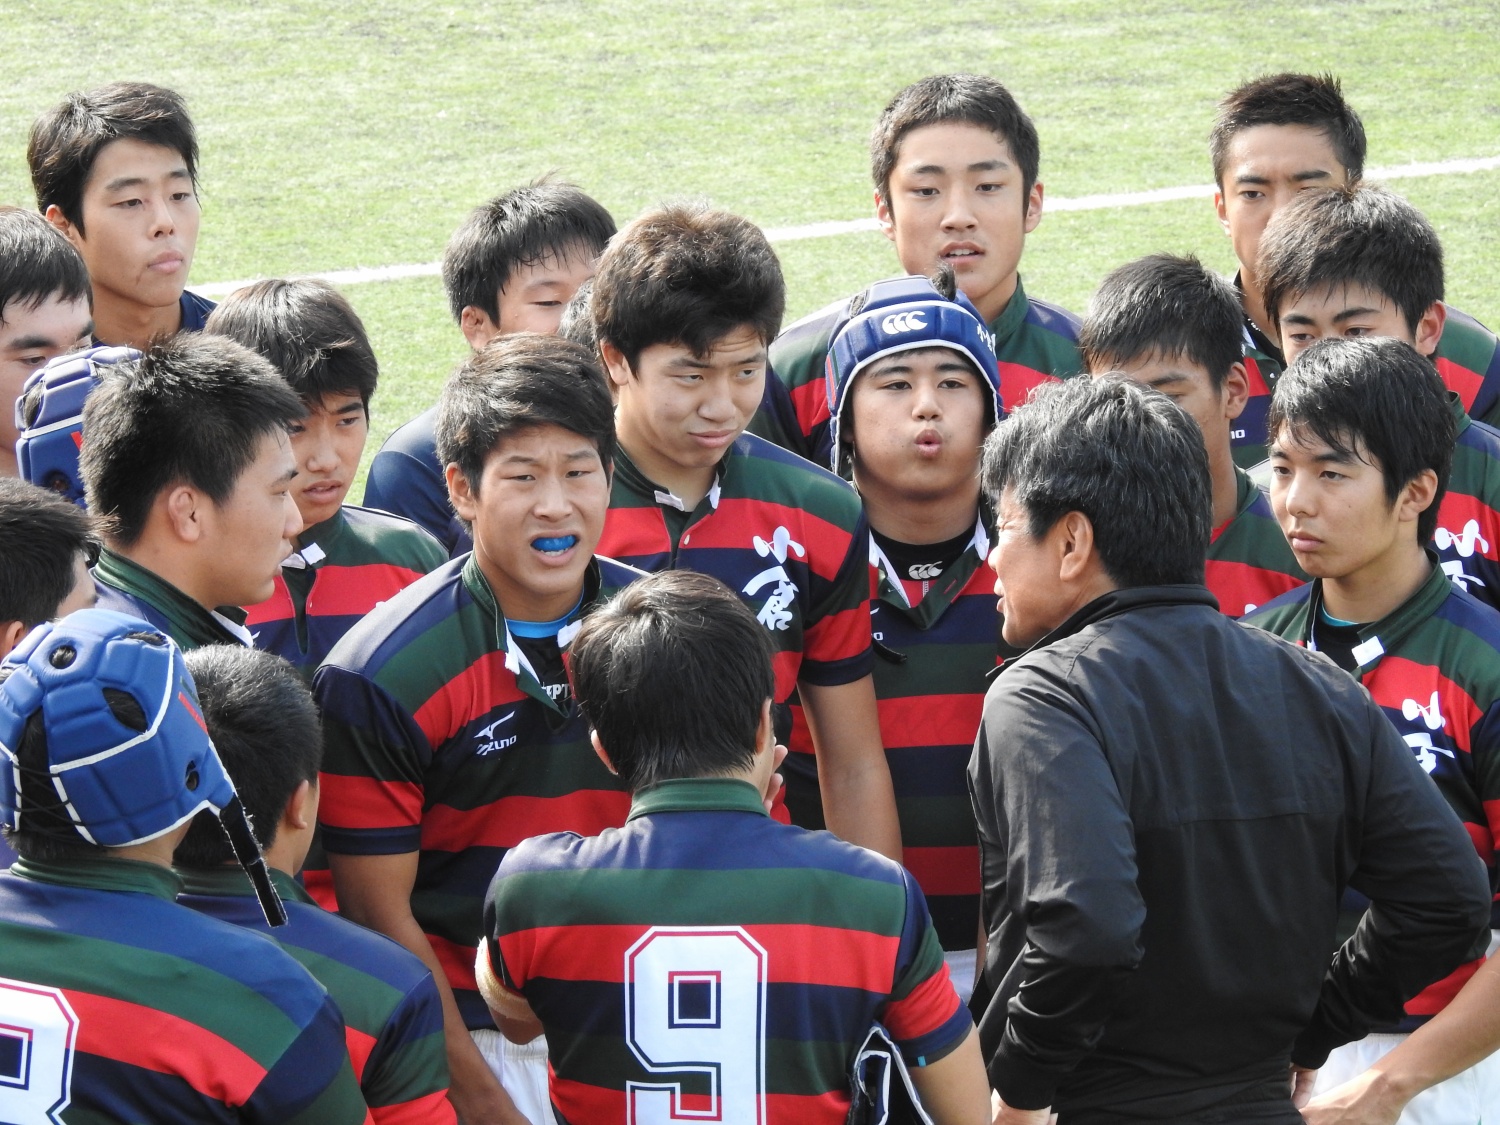 http://kokura-rugby.sakura.ne.jp/DSCN7977_xlarge.JPG